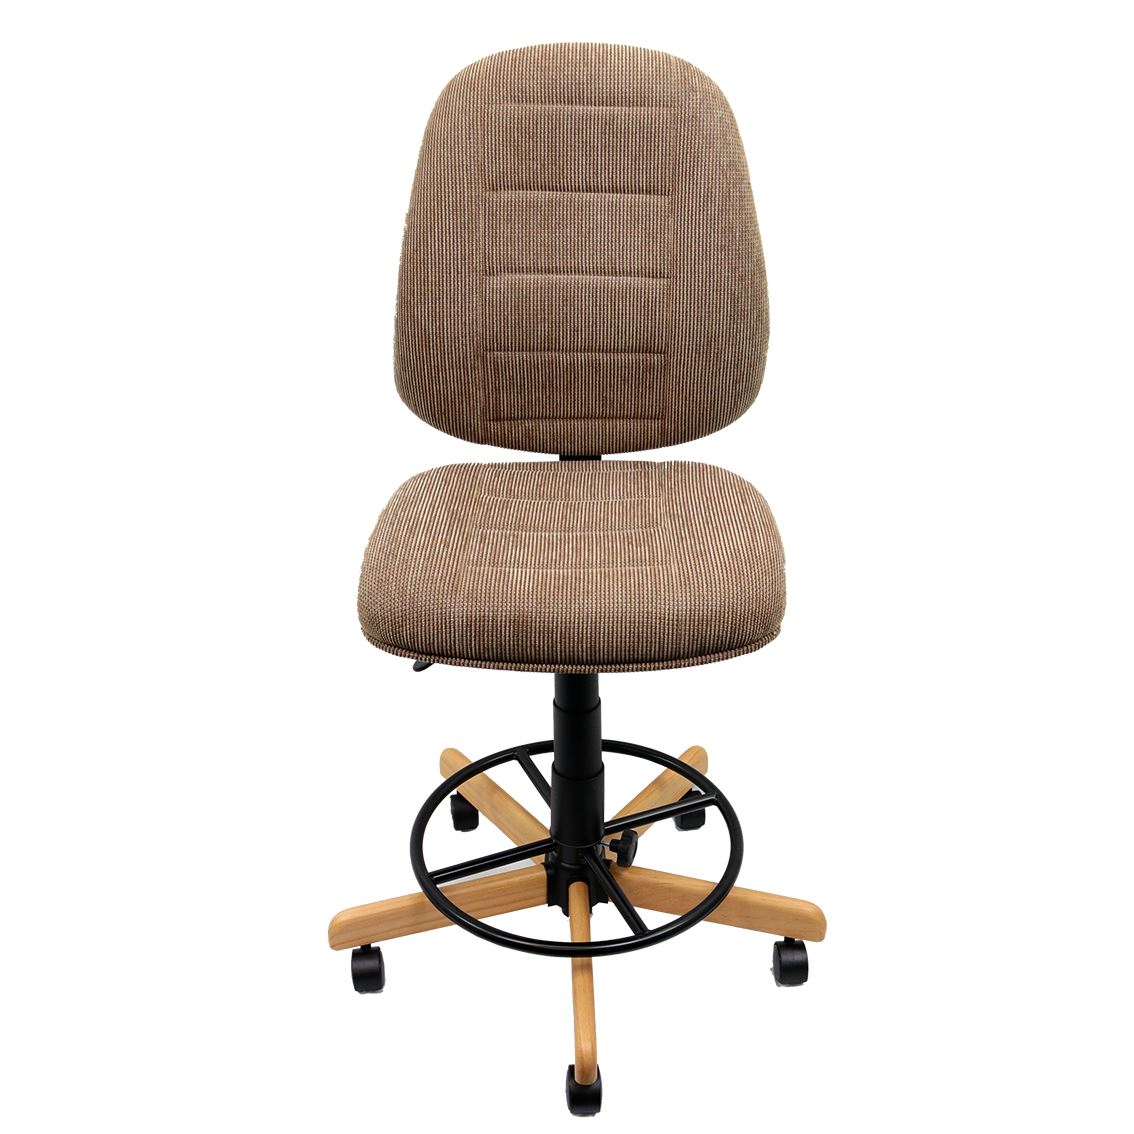 SewComfort Chair